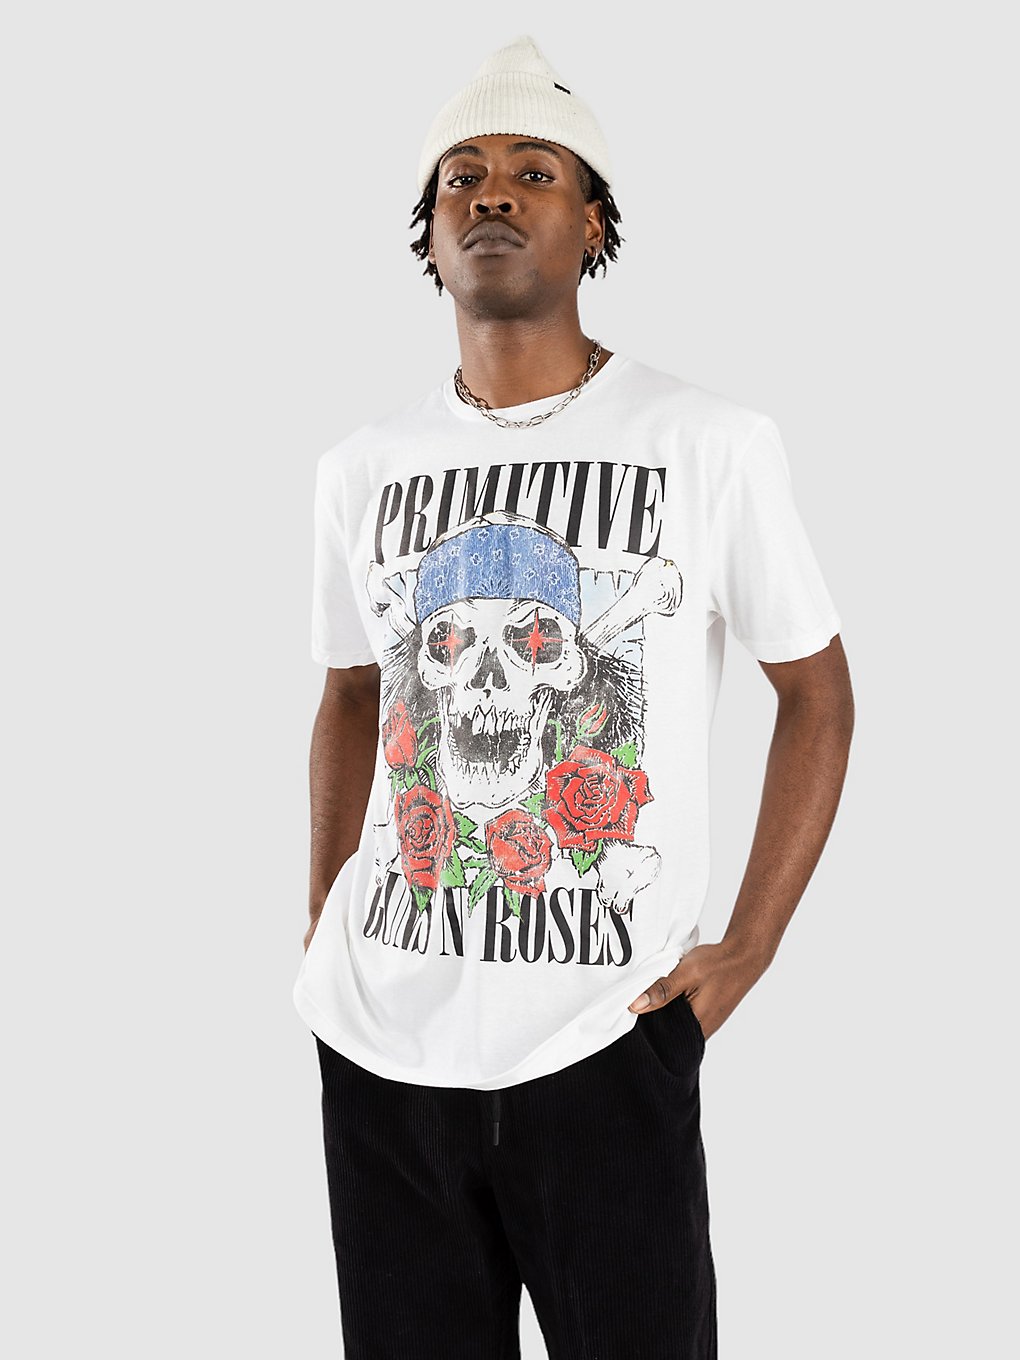 Primitive X Guns N Roses Streets T-Shirt white kaufen